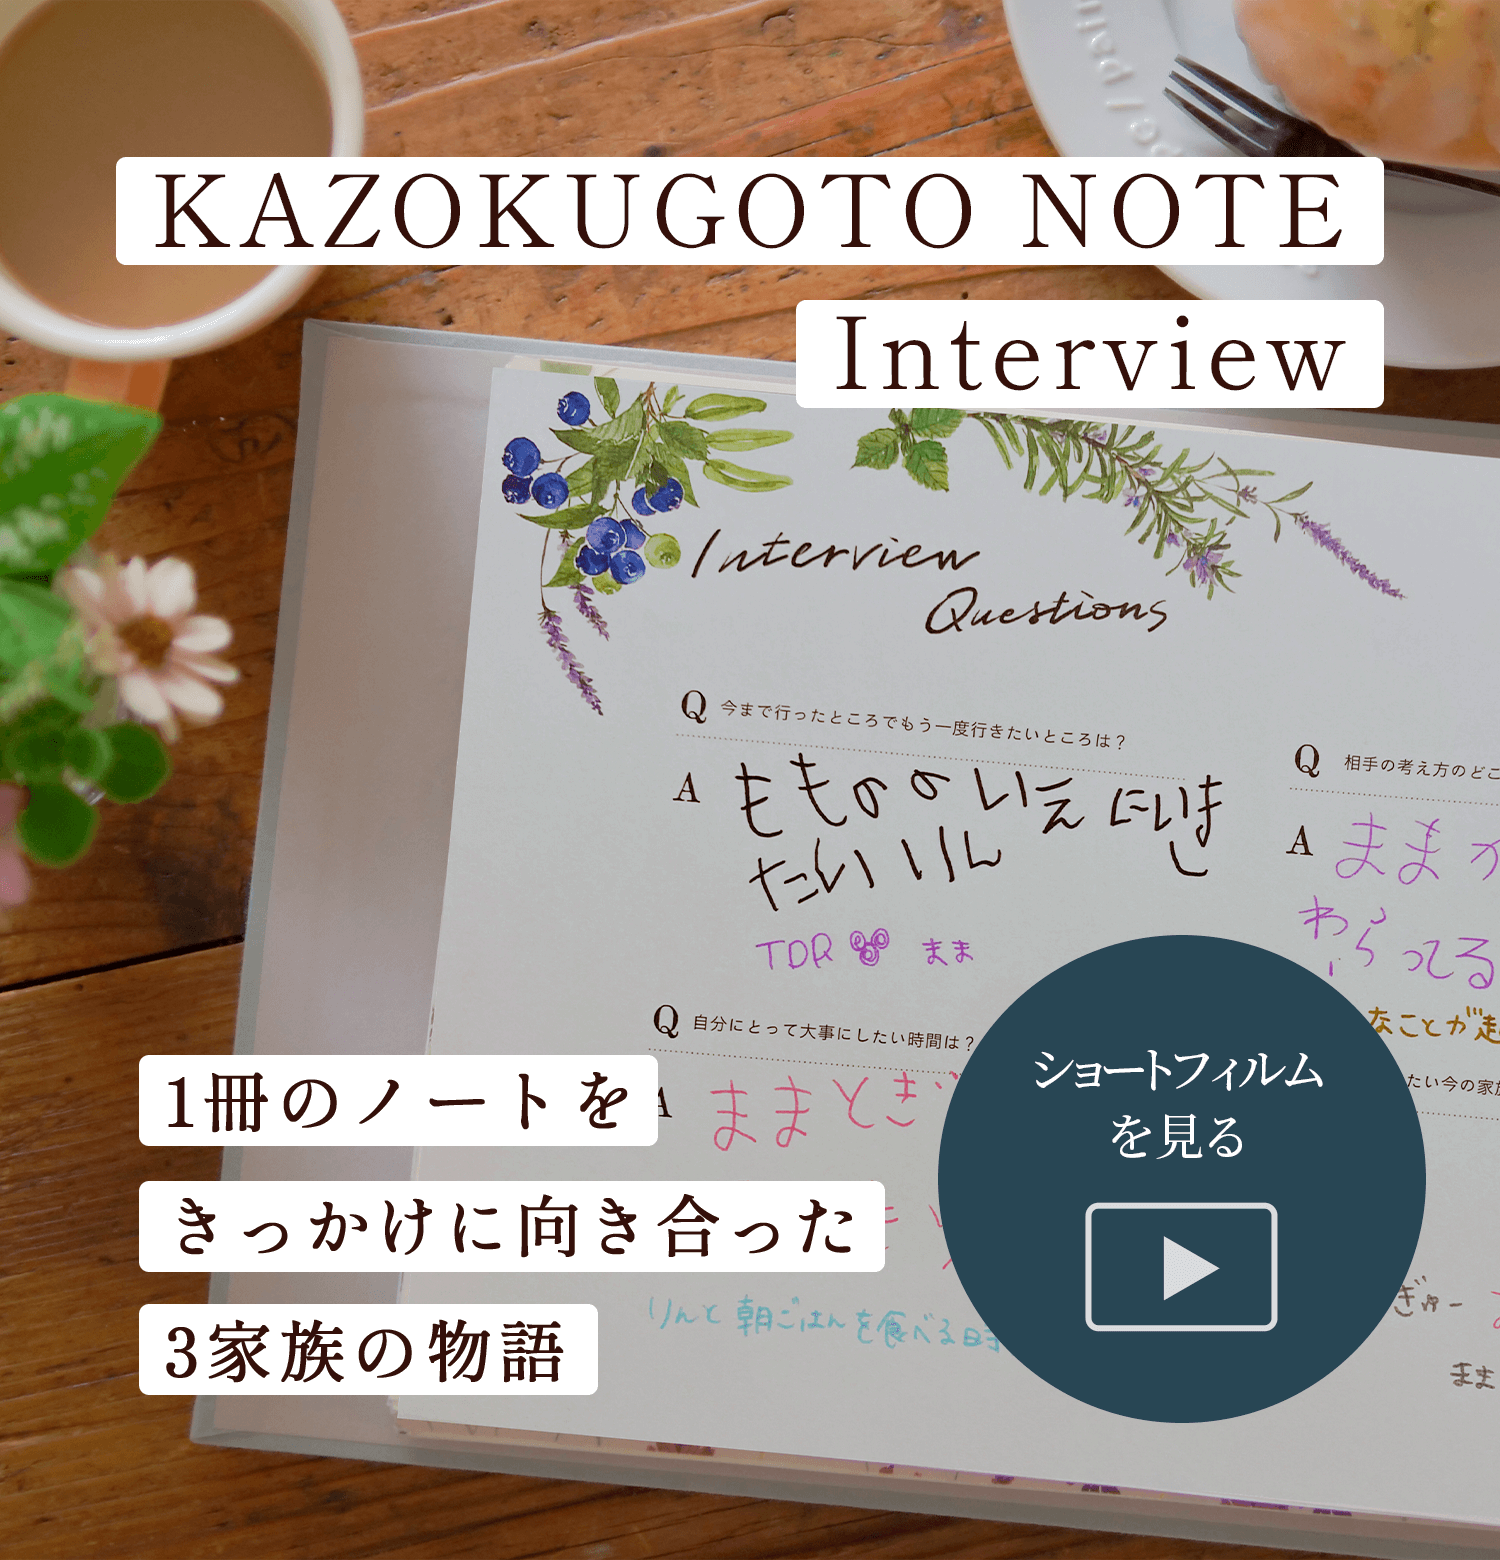 KAZOKUGOTO NOTE Interview 1冊のノートをきっかけに向き合った、3家族の物語。